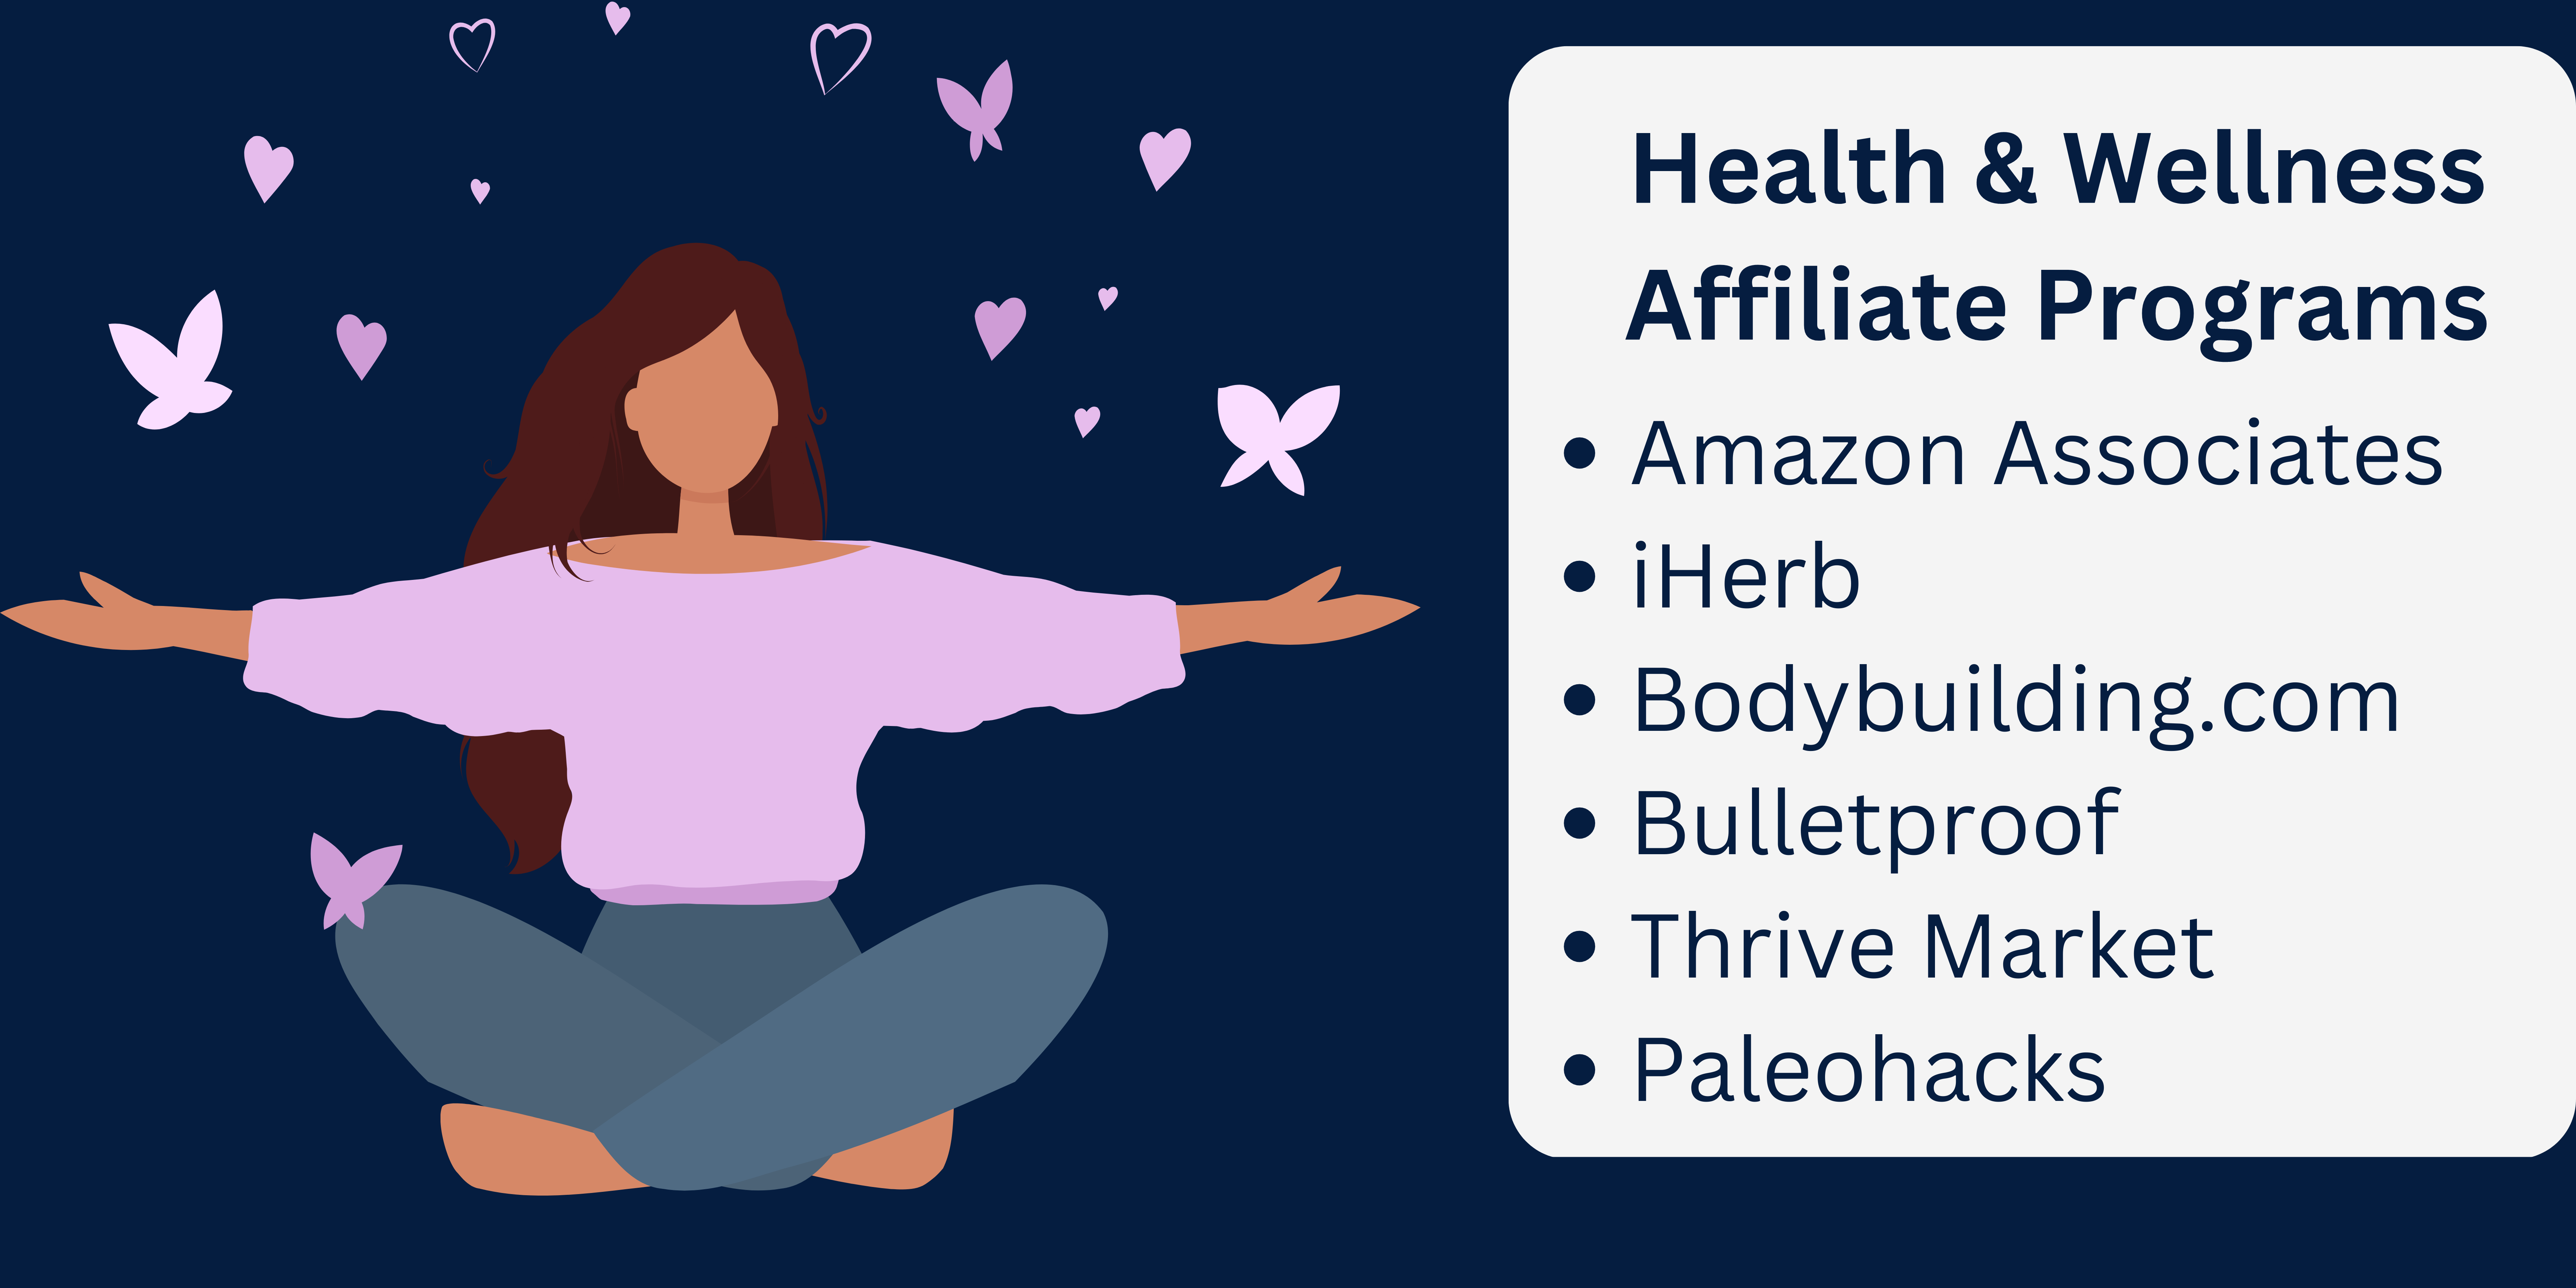 alt="list of health and wellness affiliate programs"